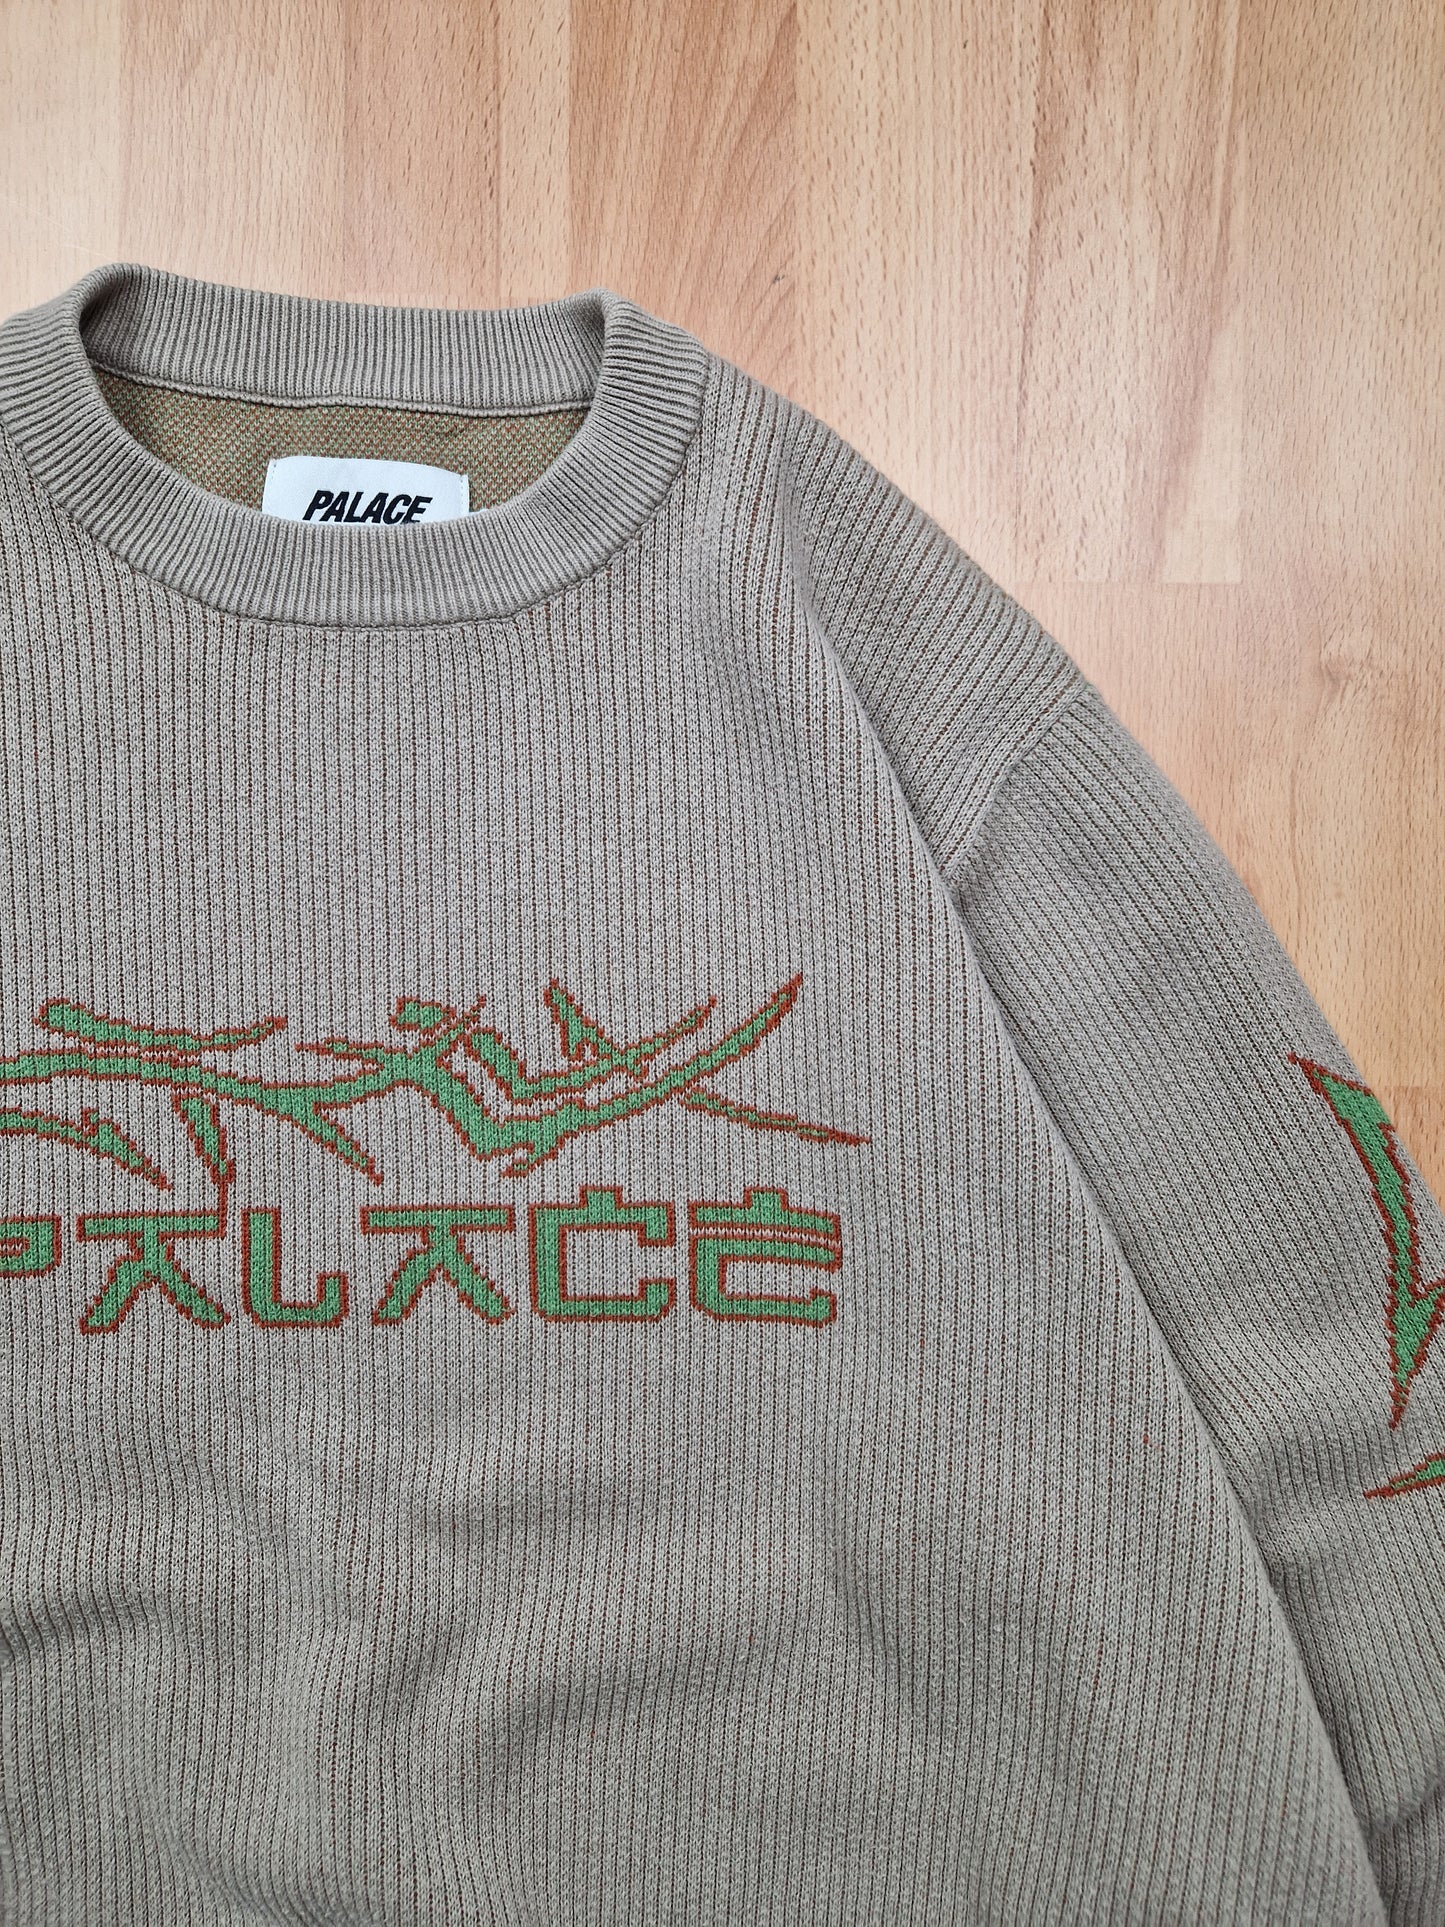 RARE Palace 'Tri-Pal' Knit Sweater (L)